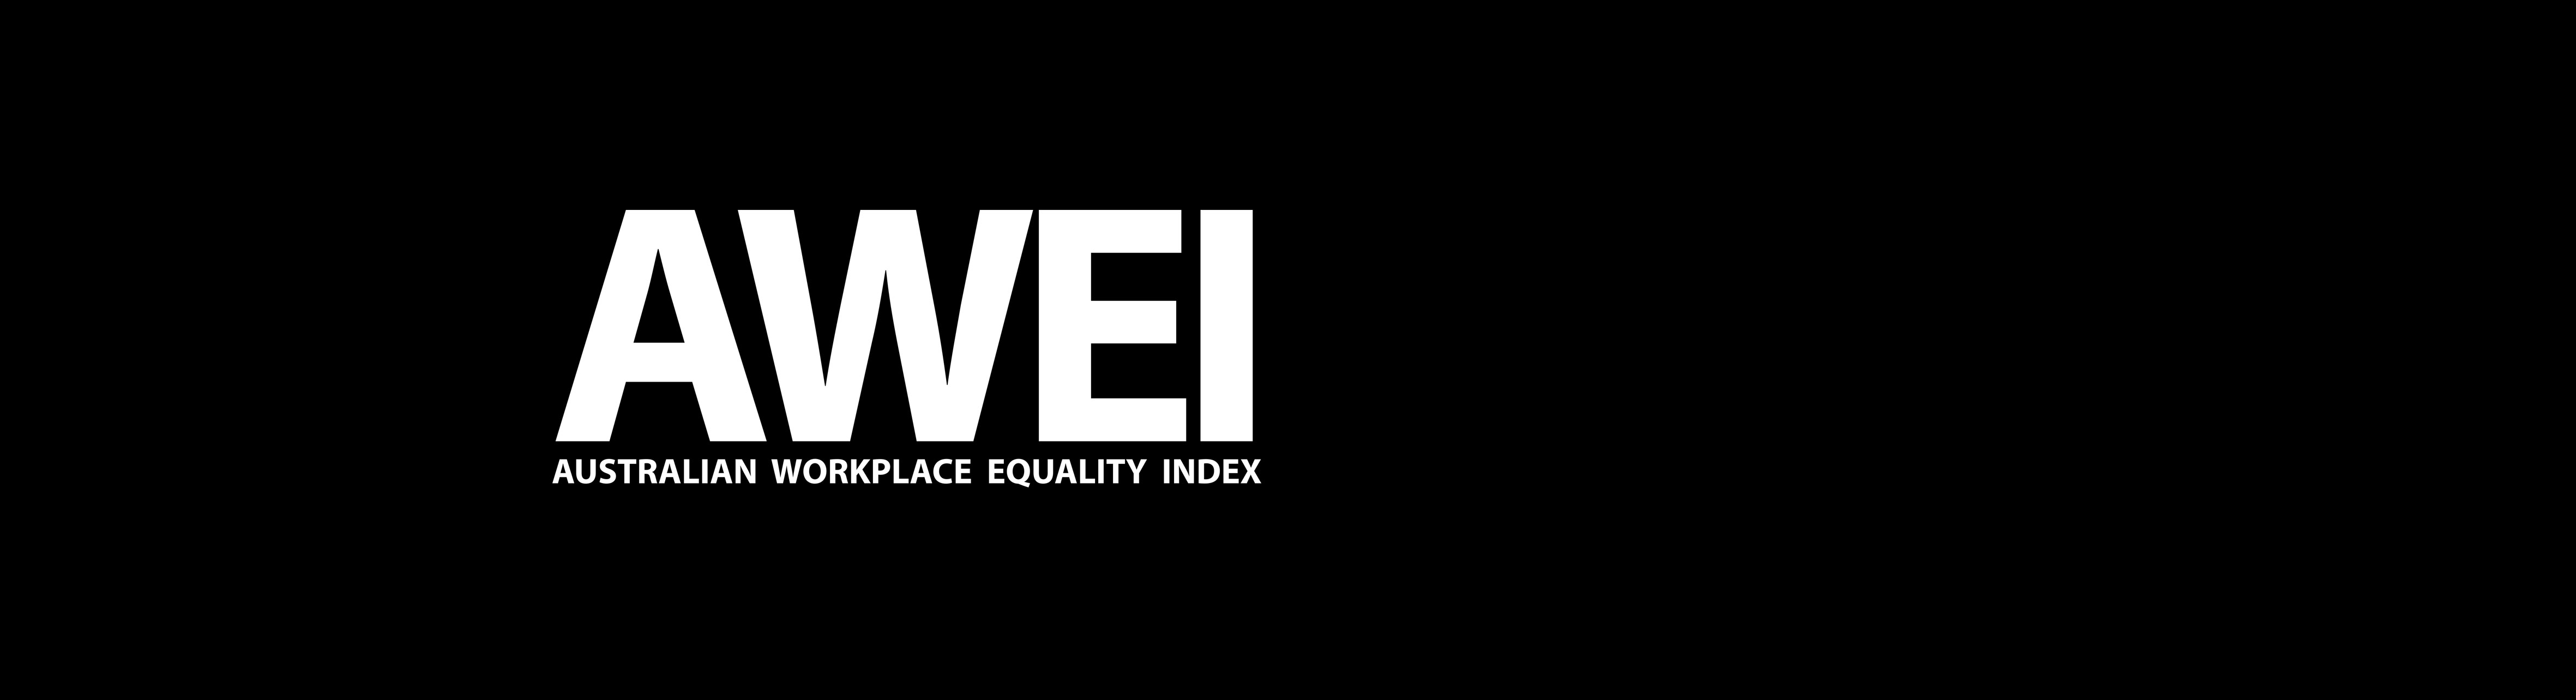 Australian Workplace Equality Index 1601